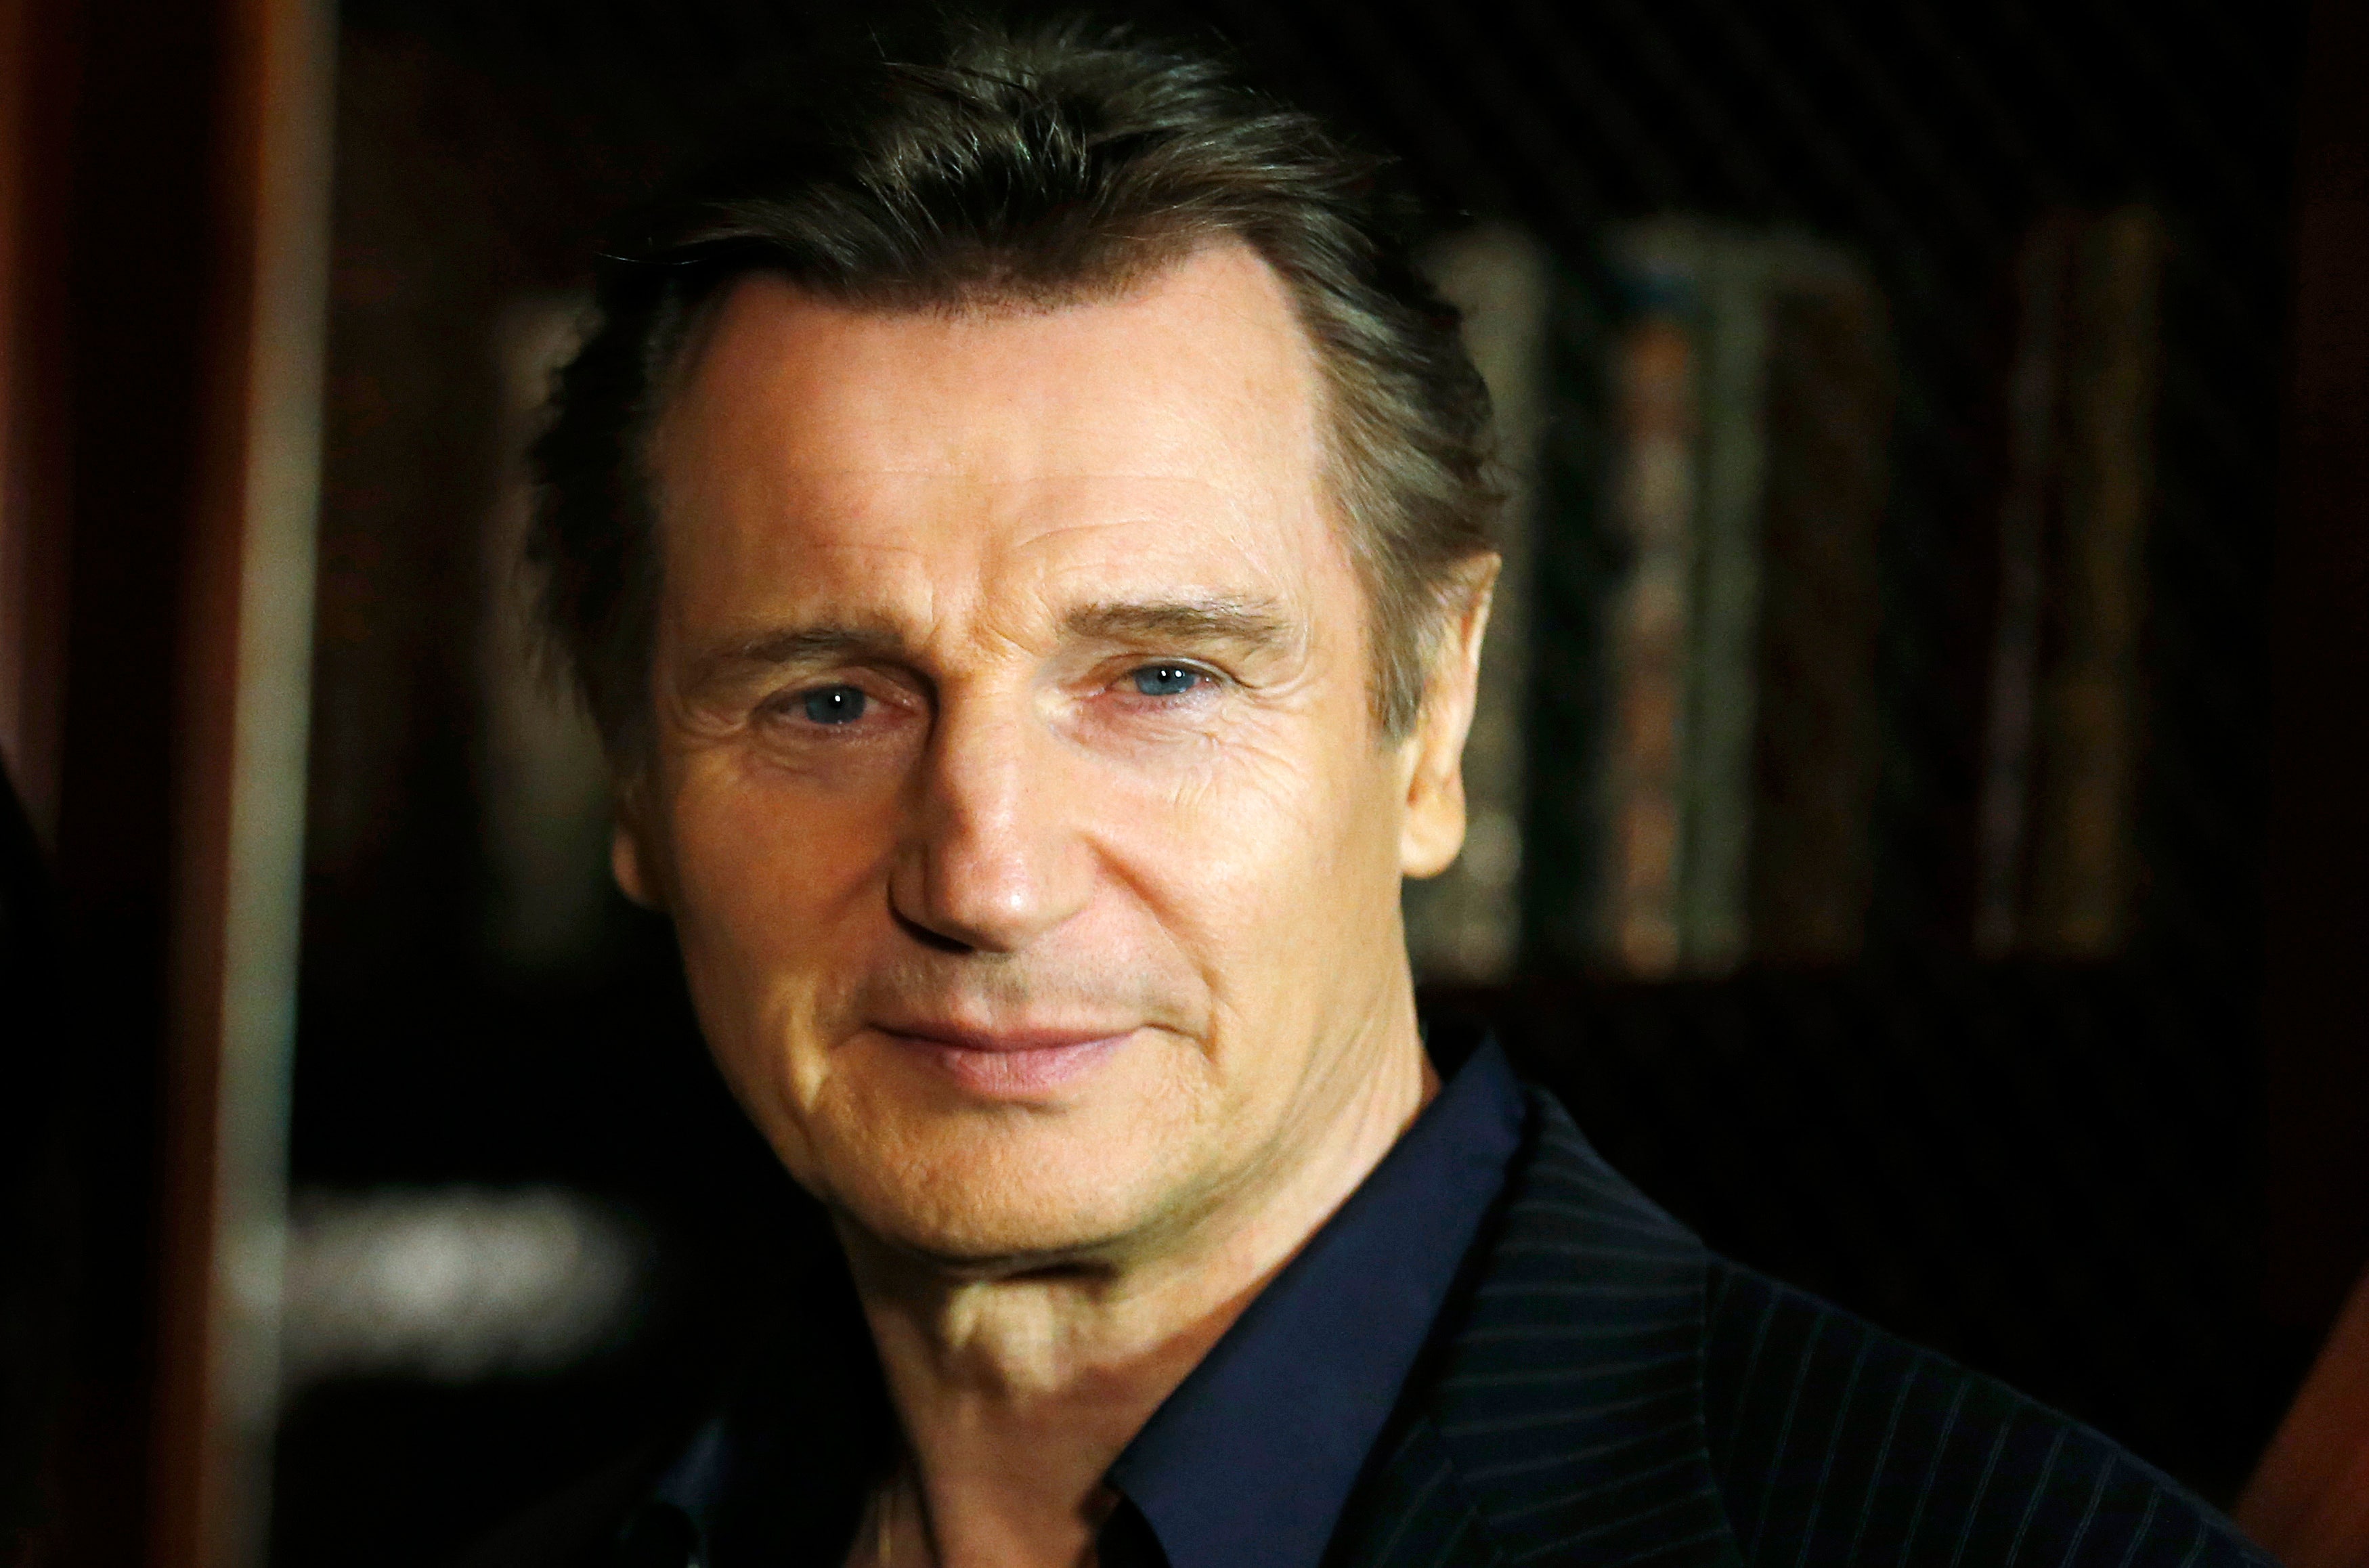 Liam Neeson's nephew falls 20 feet, suffers head injury | Fox News